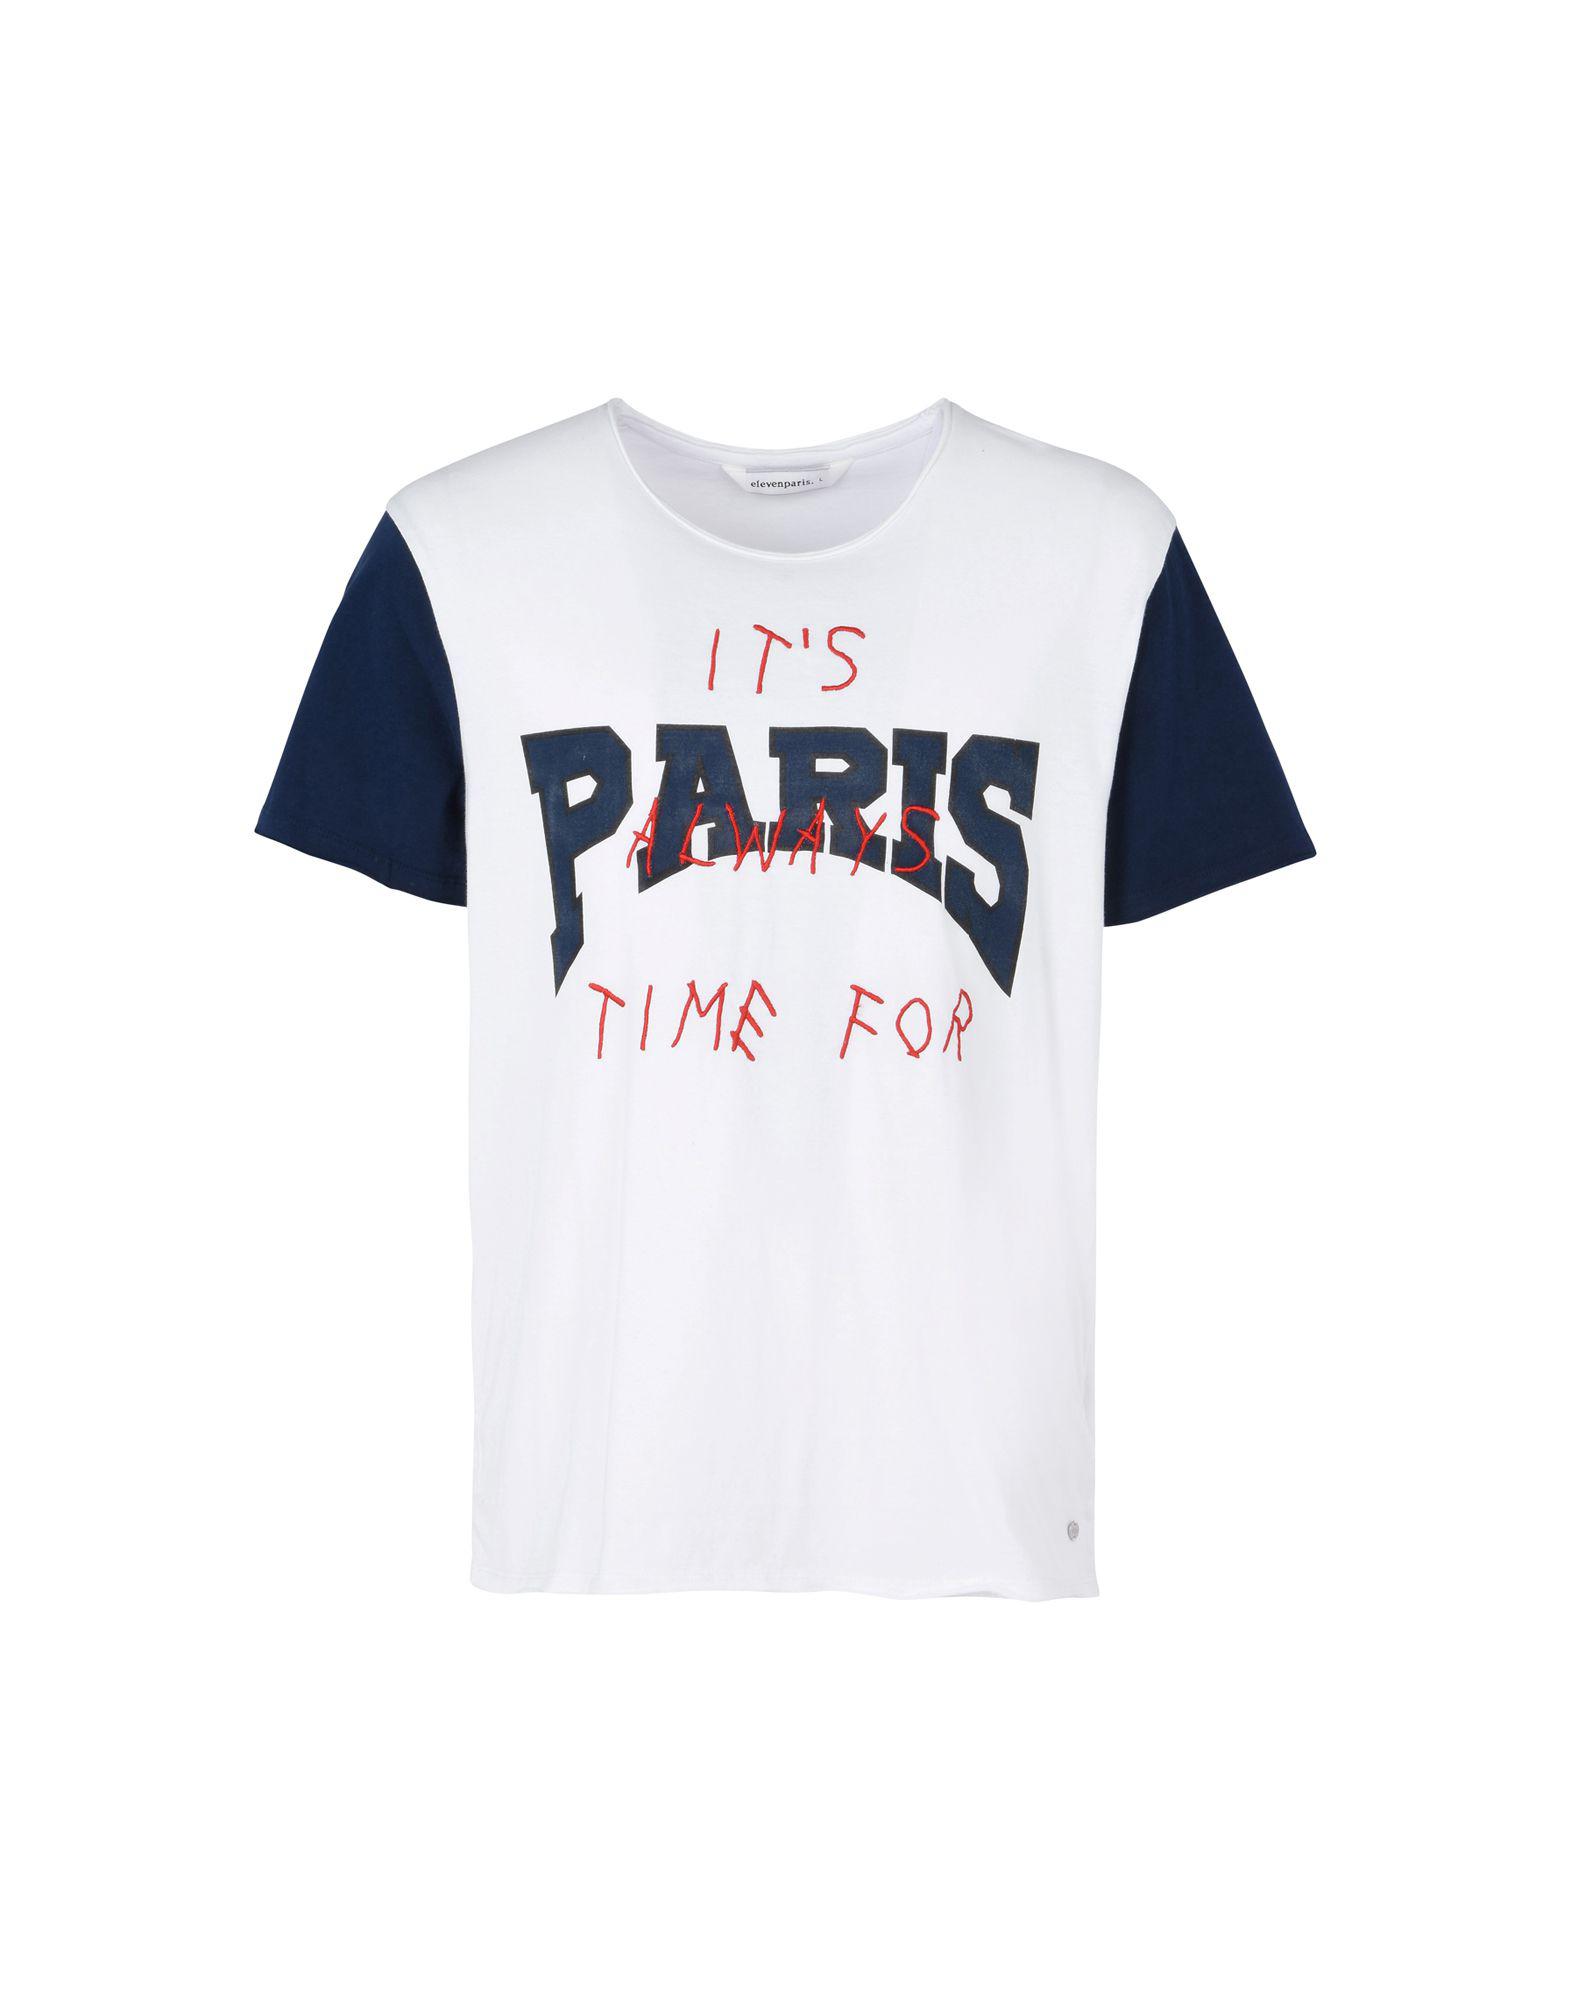 ELEVEN PARIS T-shirt in White for Men - Lyst